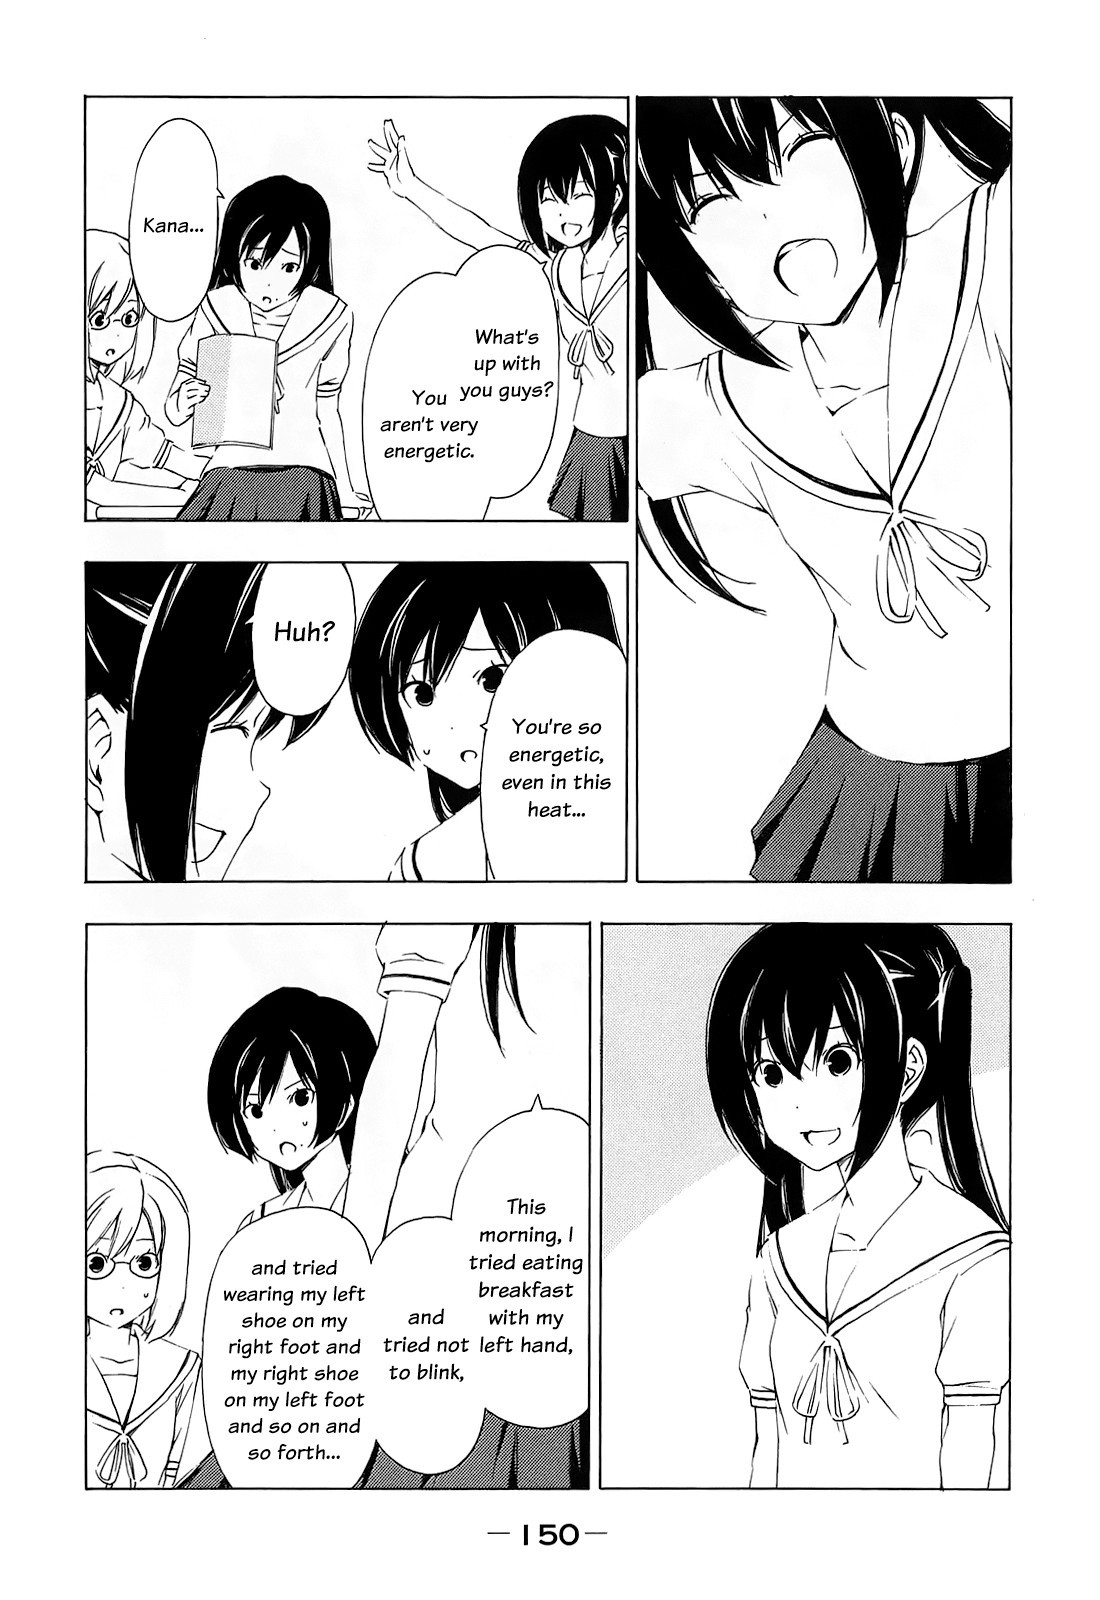 Minami-ke chapter 158 page 3